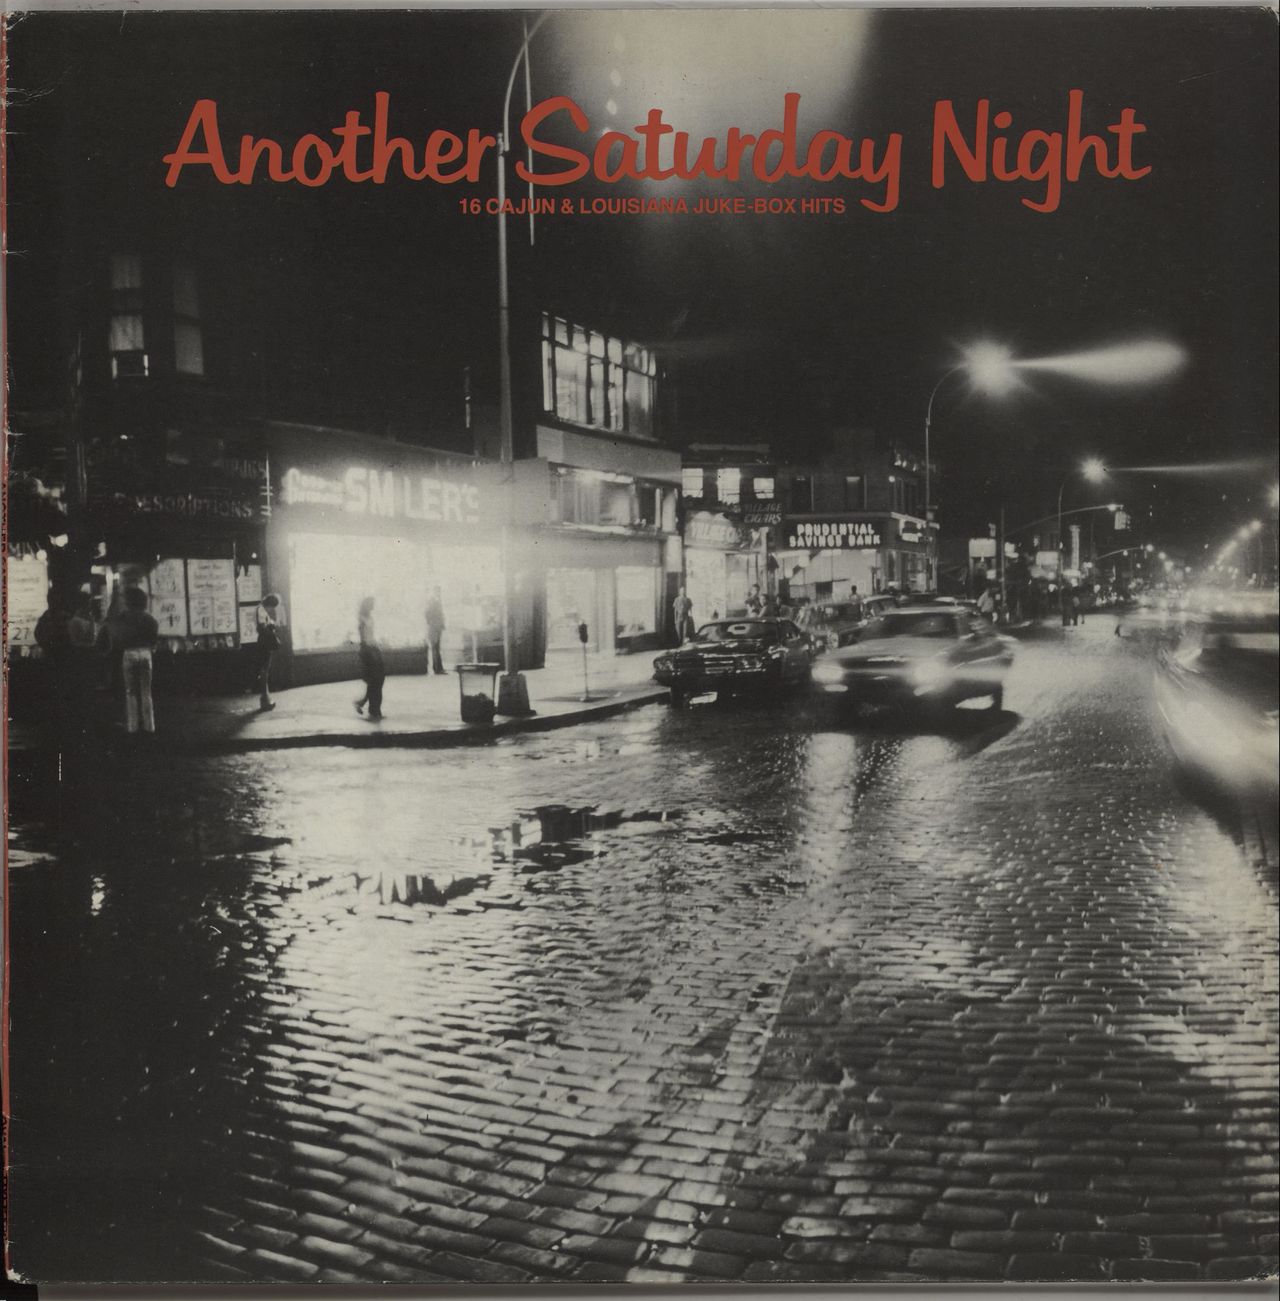 Various-Soul & Funk Another Saturday Night UK Vinyl LP — RareVinyl.com